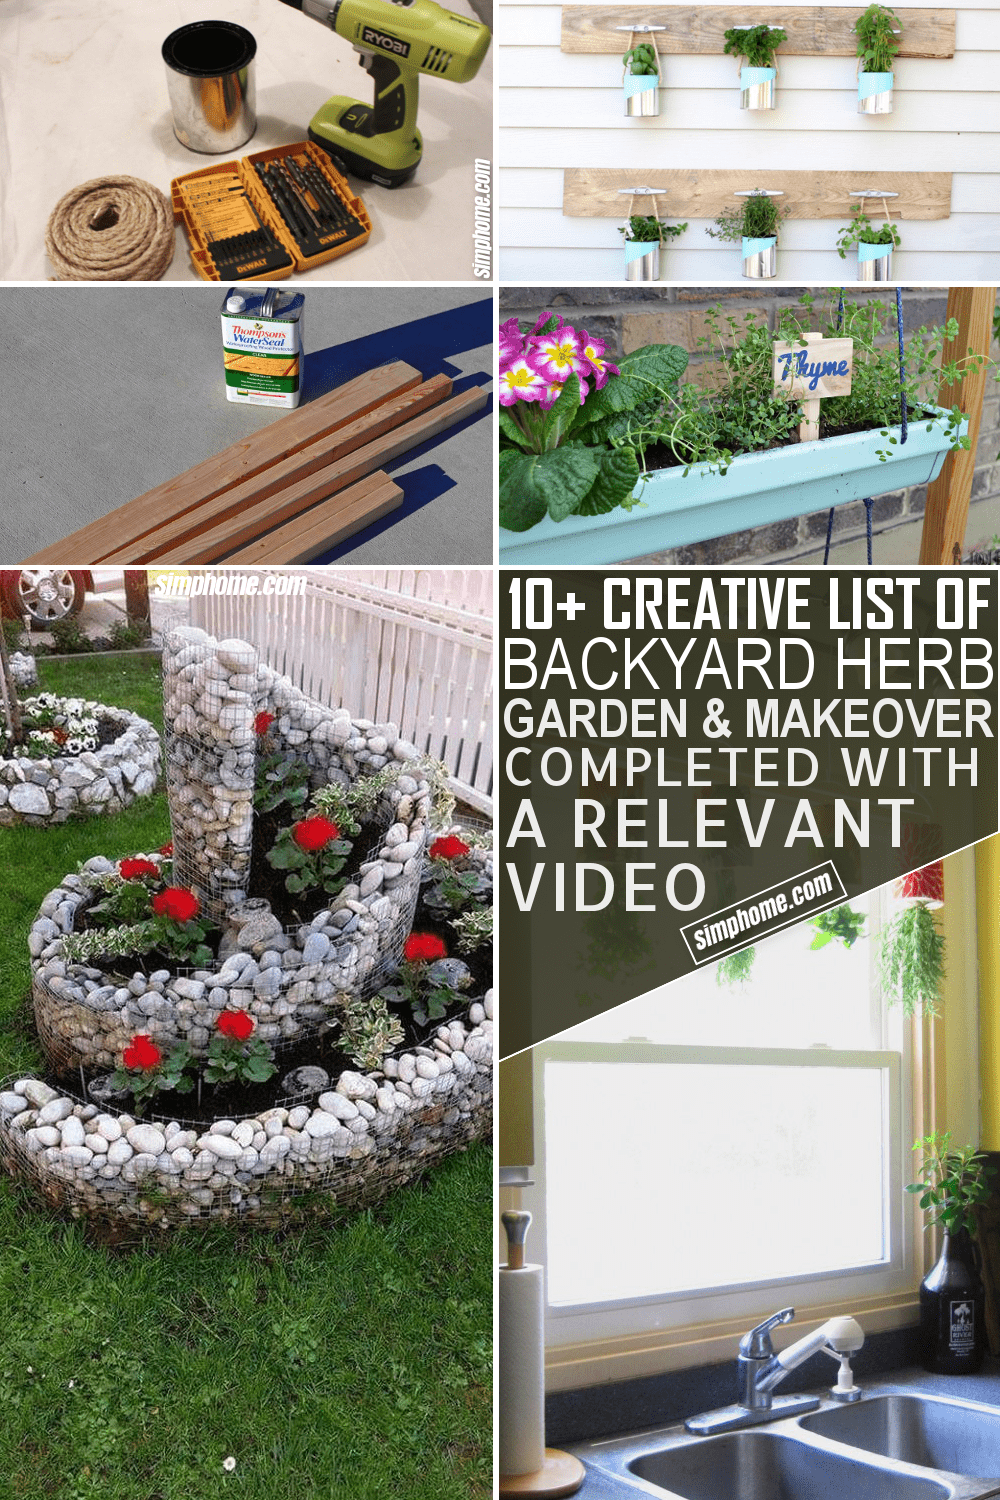 10 Backyard Herb Garden Ideas via Simphome.com Featured Image